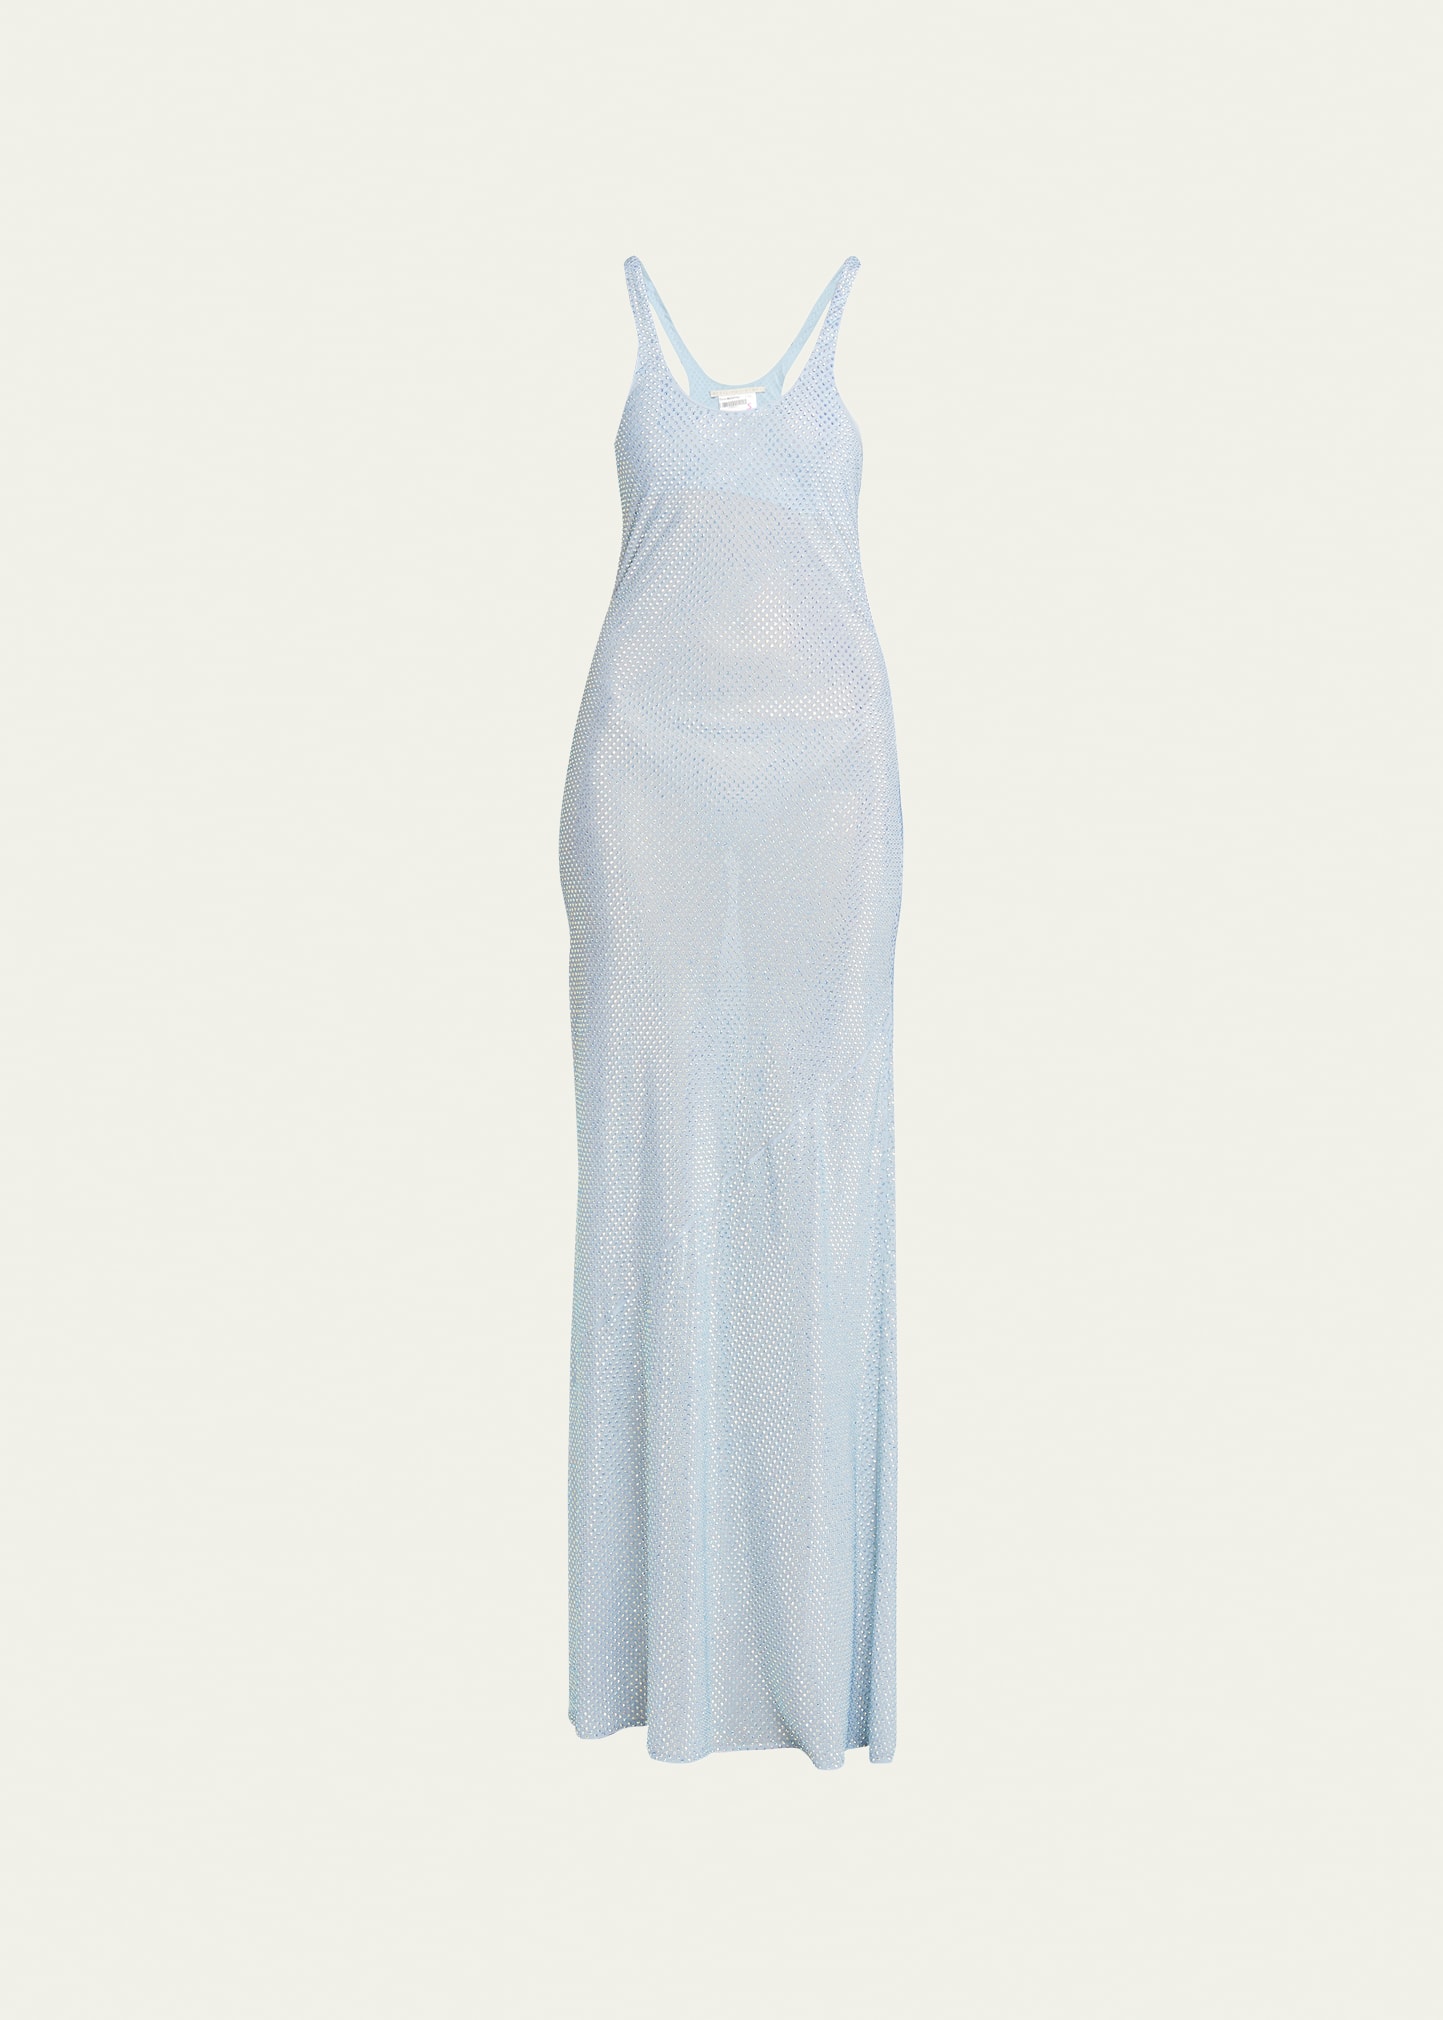 Stella McCartney Long Racerback Dress with Crystal Embellishment